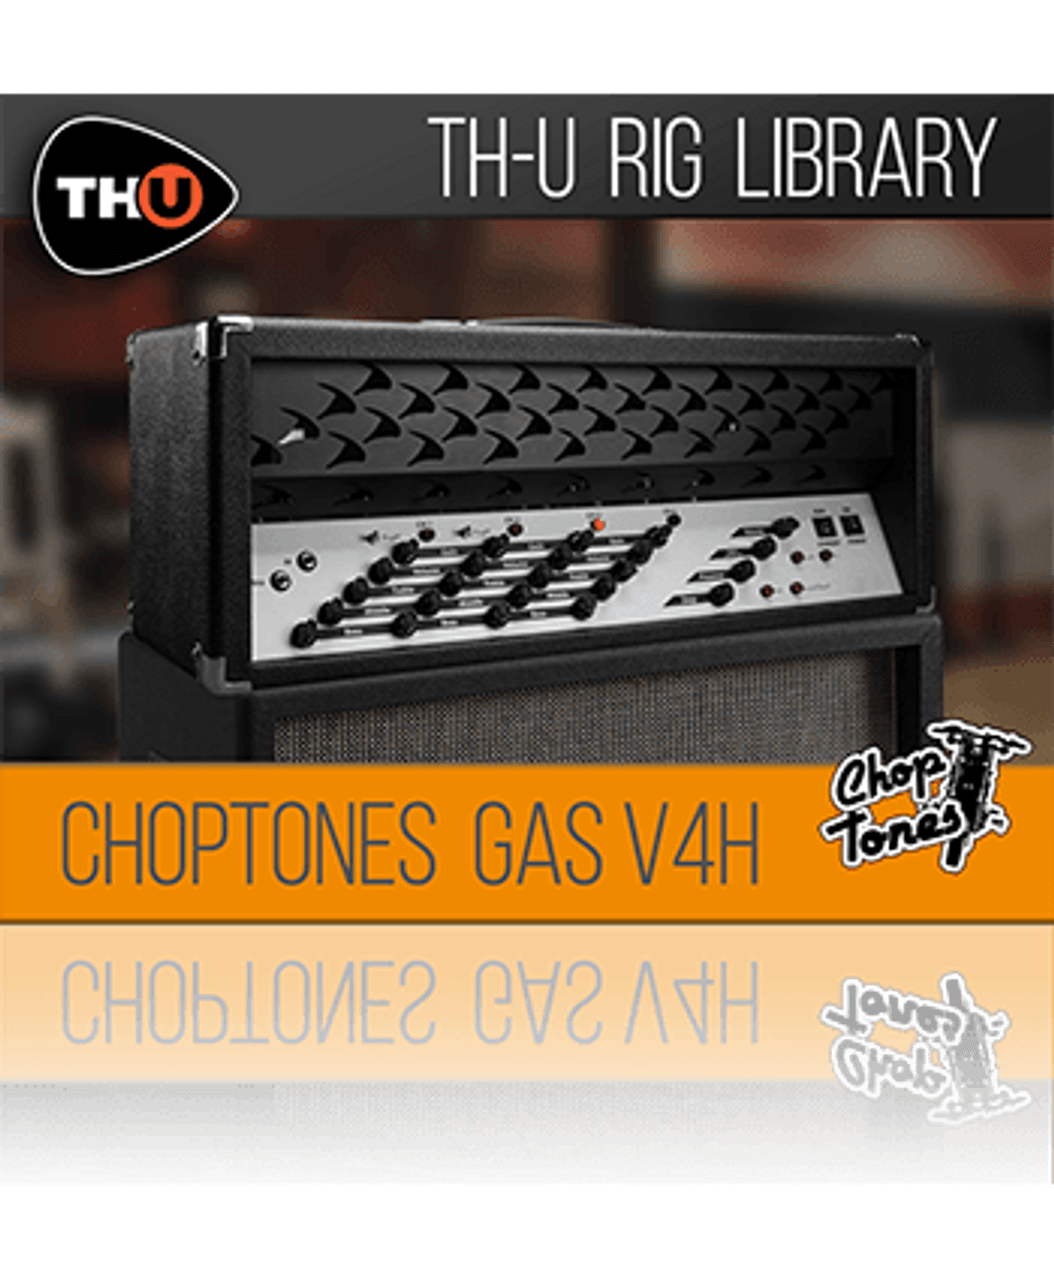 Choptones GAS V4H - Rig Library for TH-U